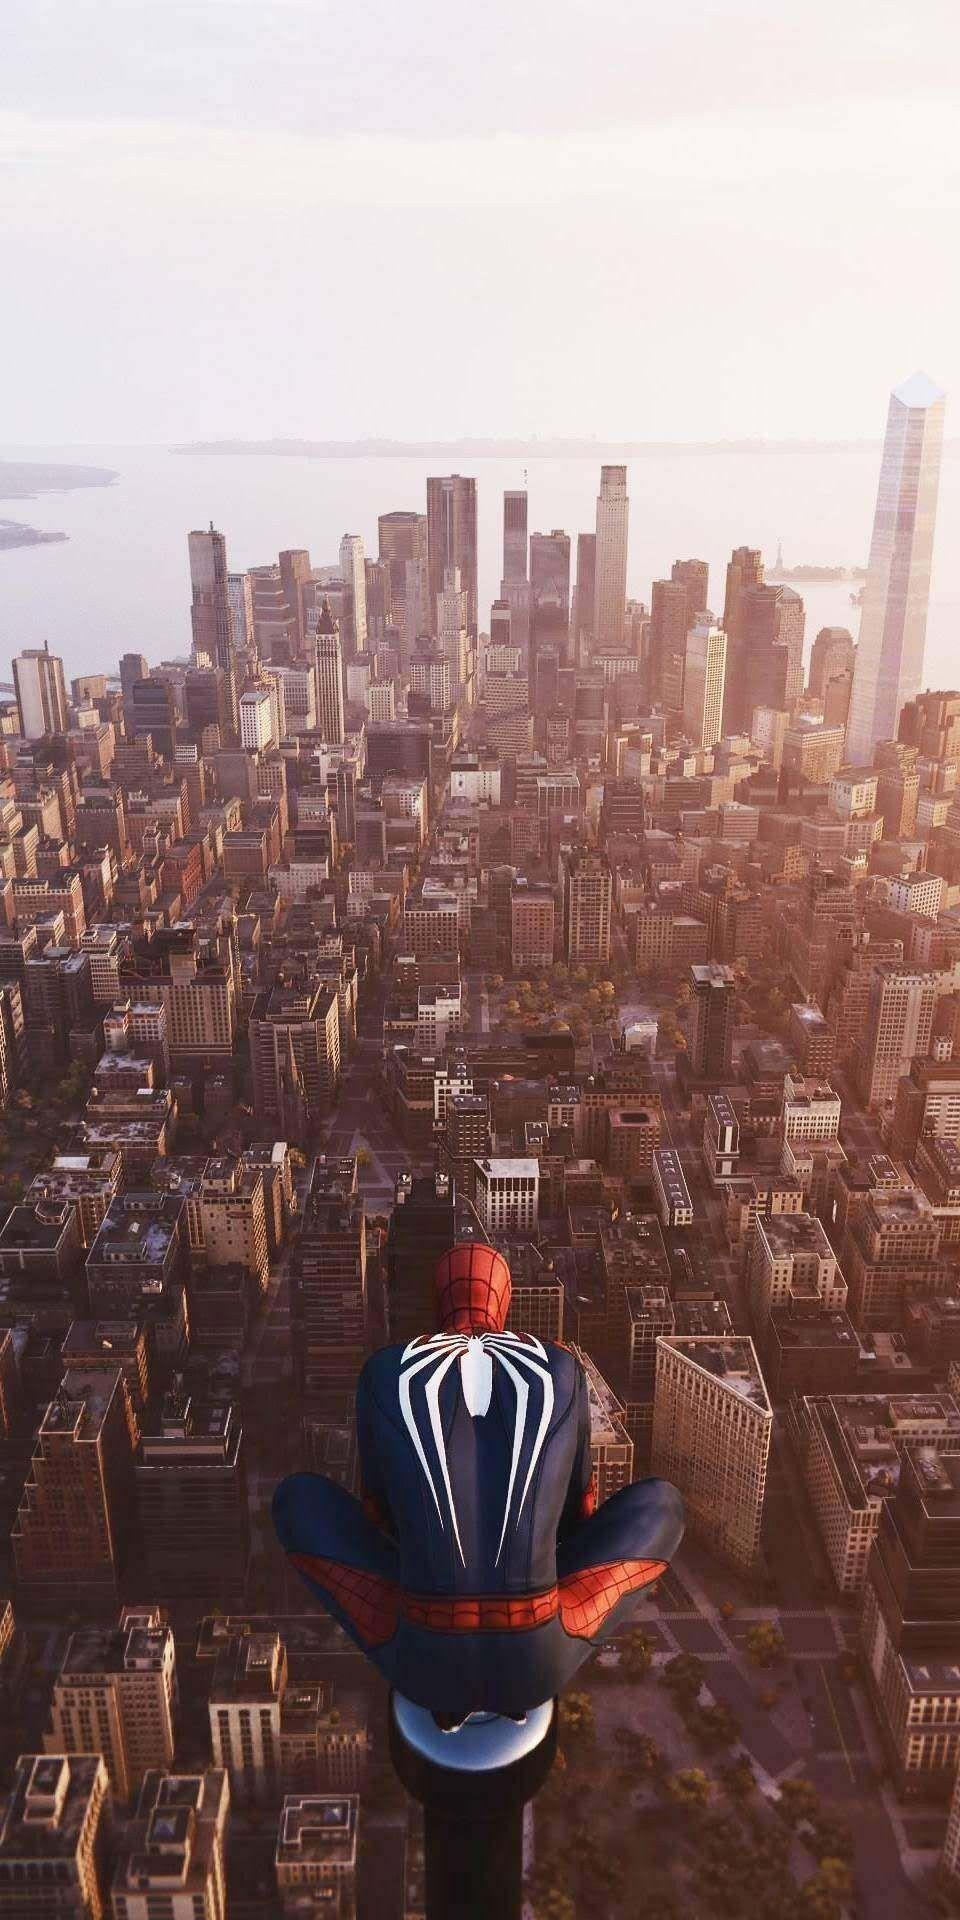 Spider Man in New York iPhone Wallpaper. Superhero wallpaper, Avengers wallpaper, Marvel wallpaper